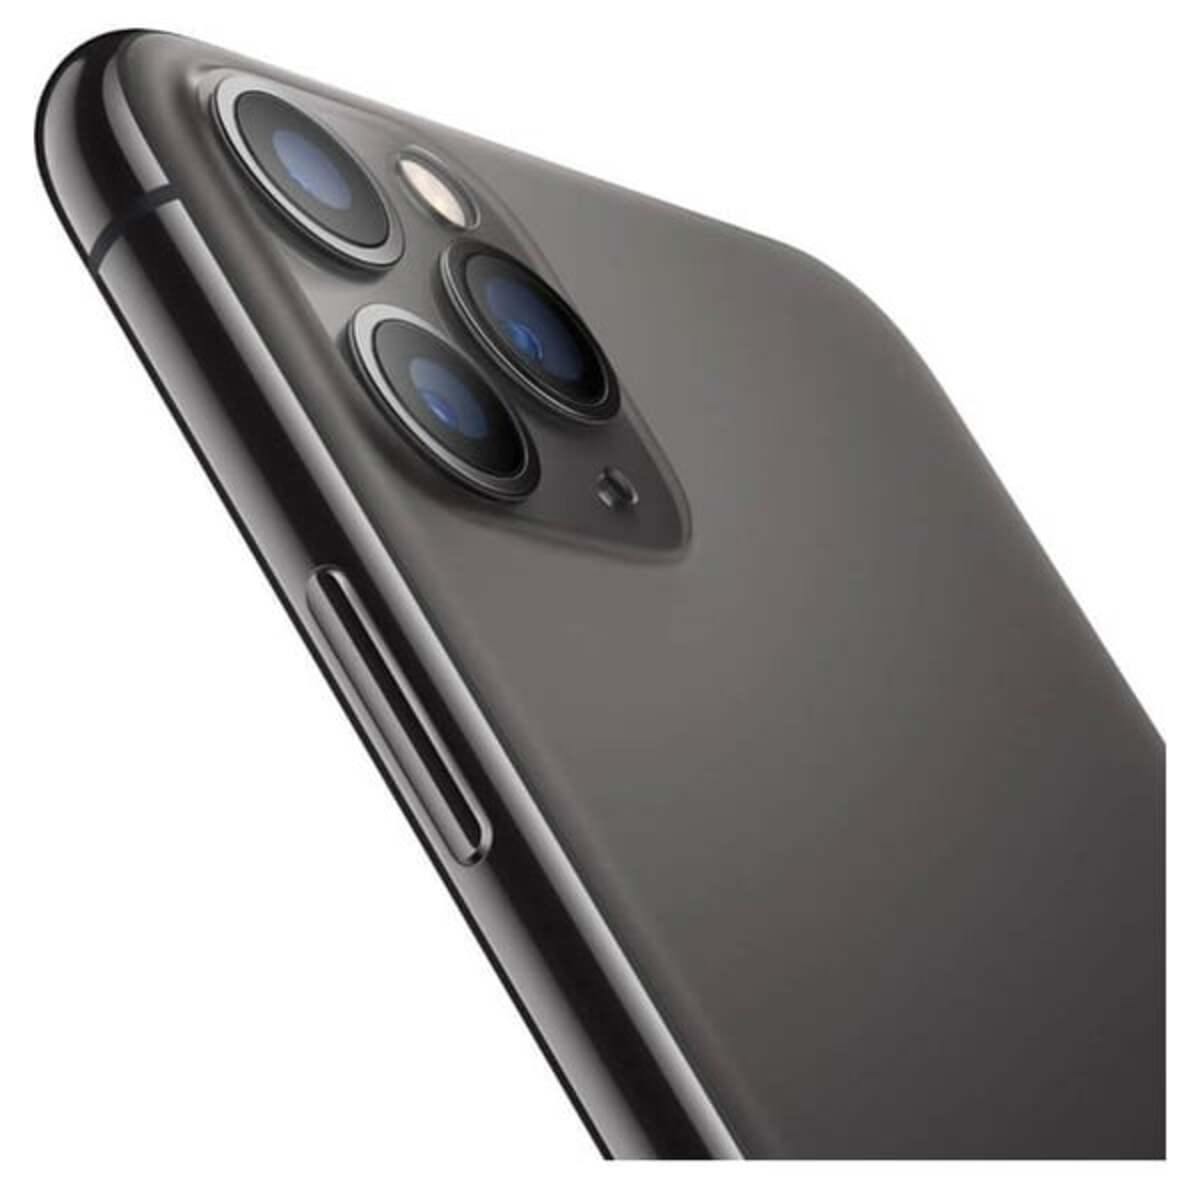 Apple Iphone 11 Pro Max 256gb Space Grey - International Version